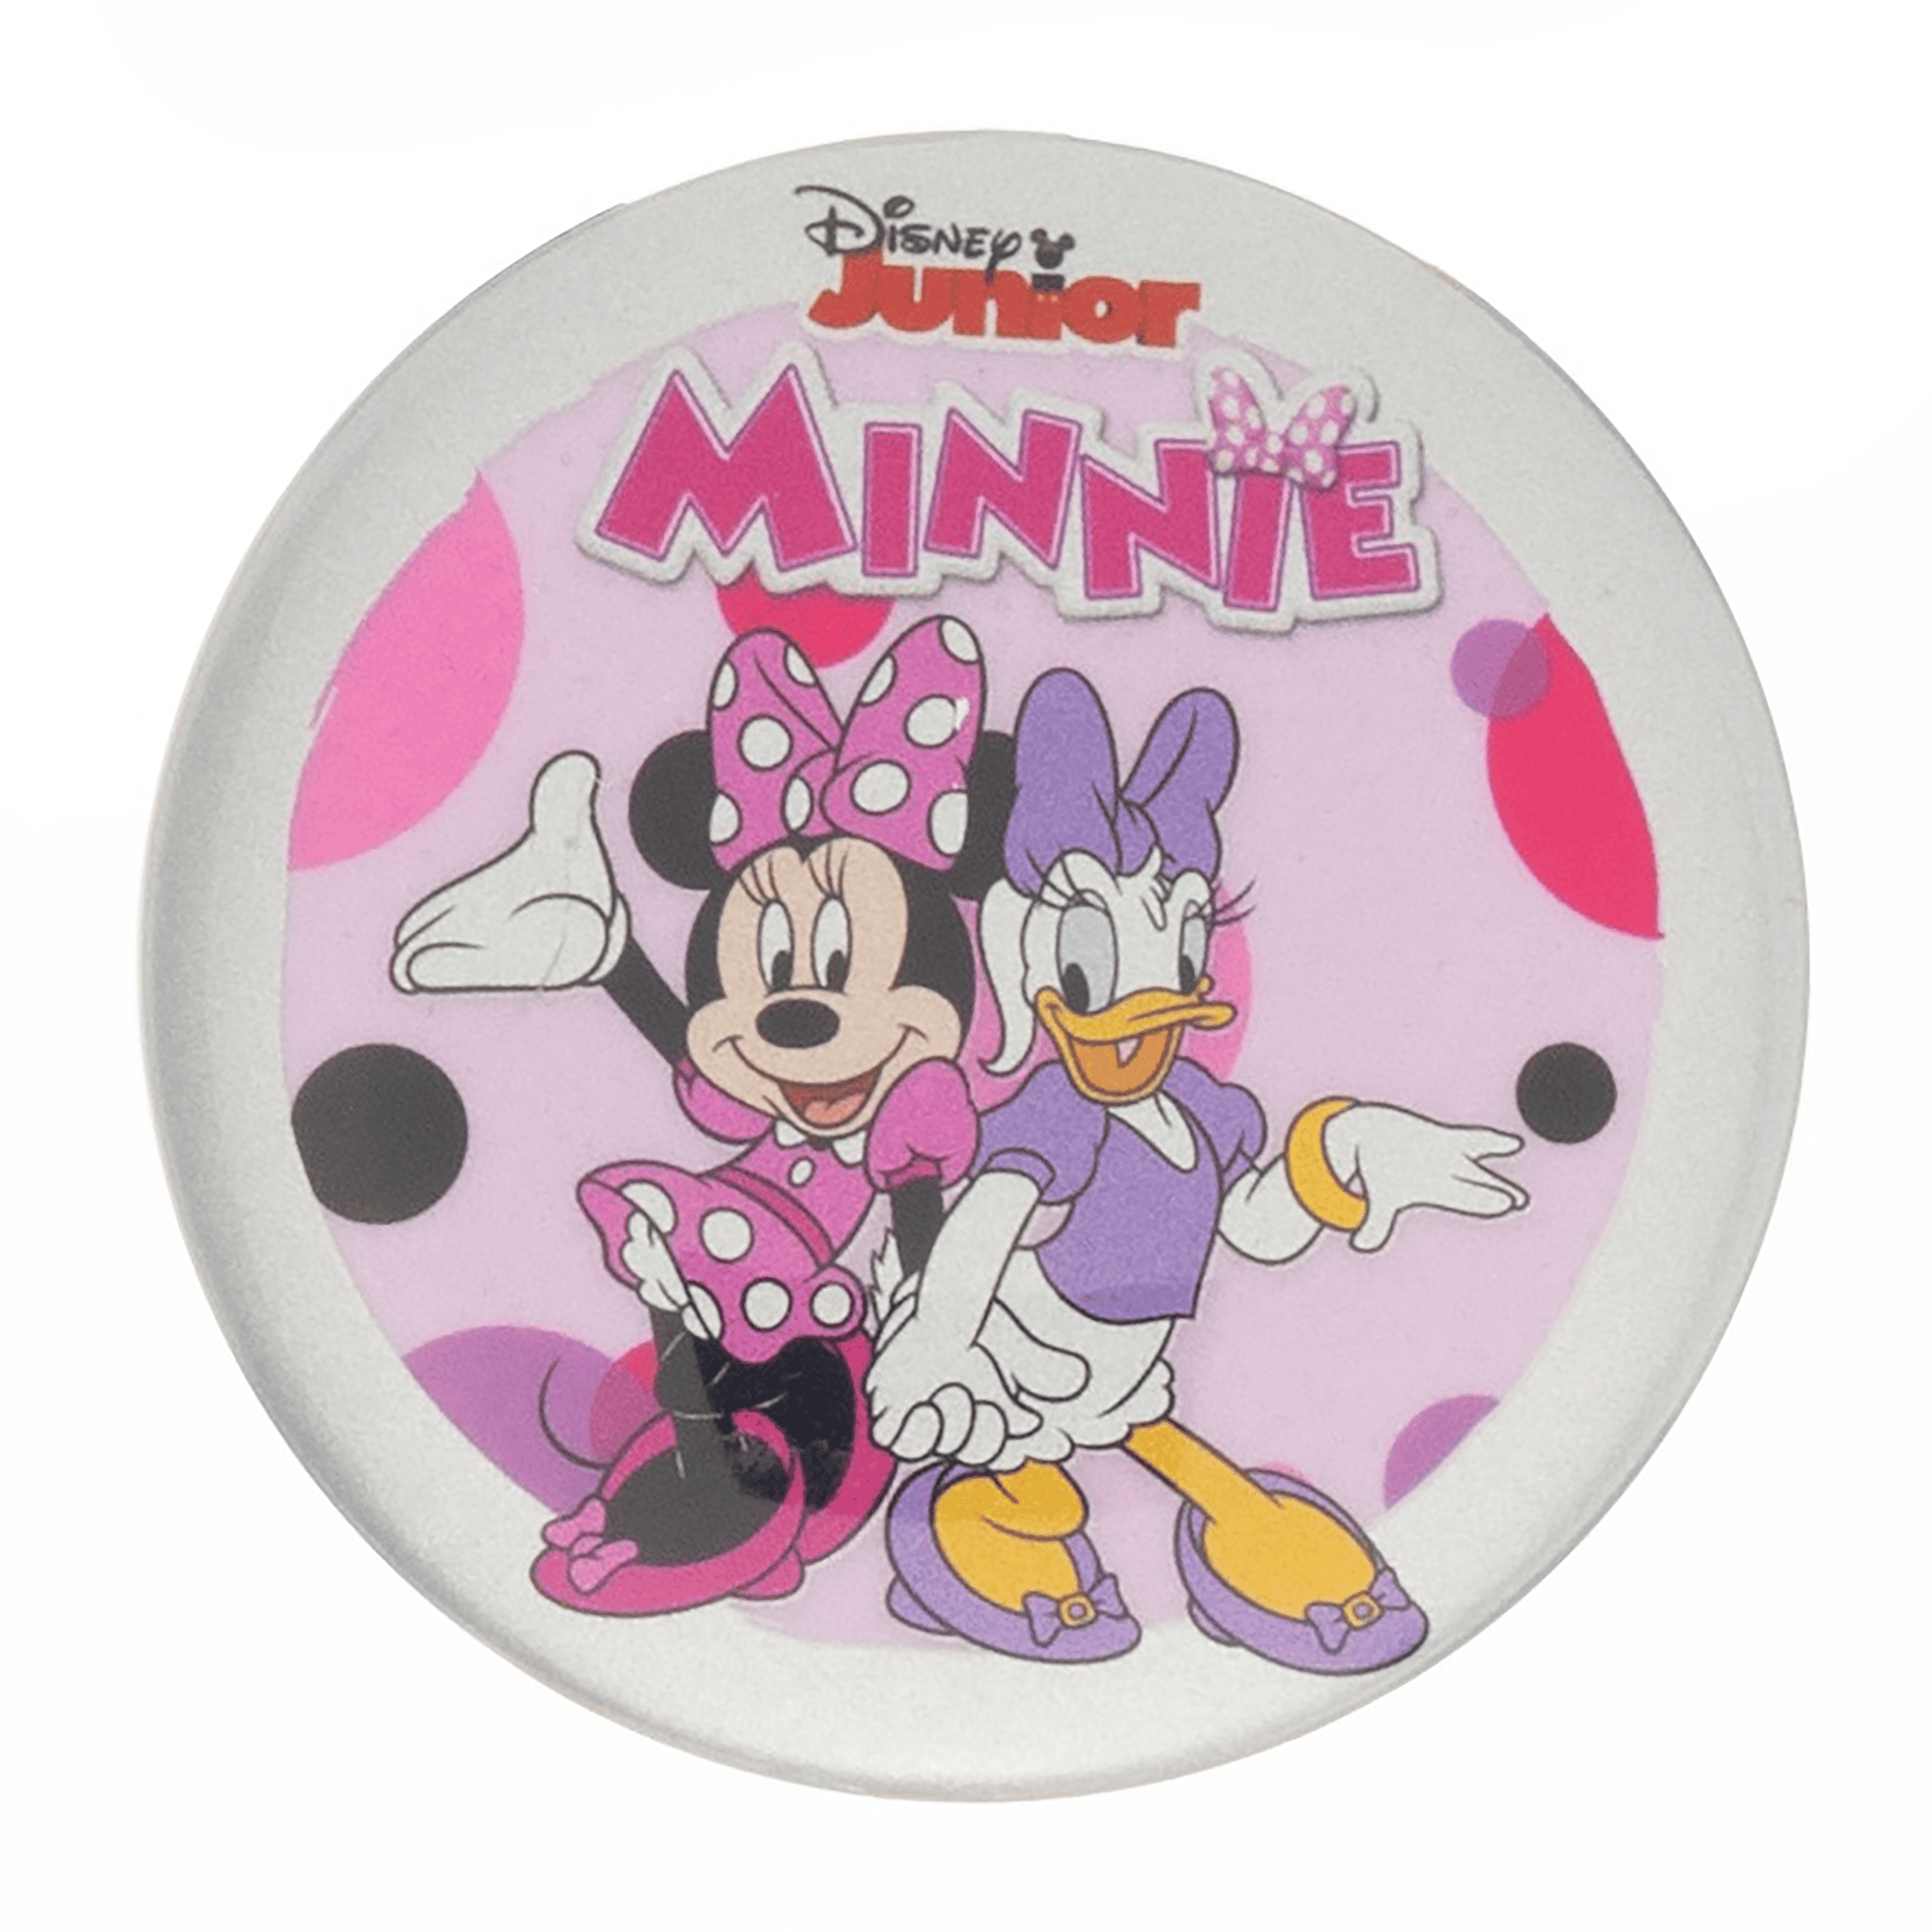 StoryShield Disney Collection - Minnie Mouse onanoff Pink 2000583661504 1